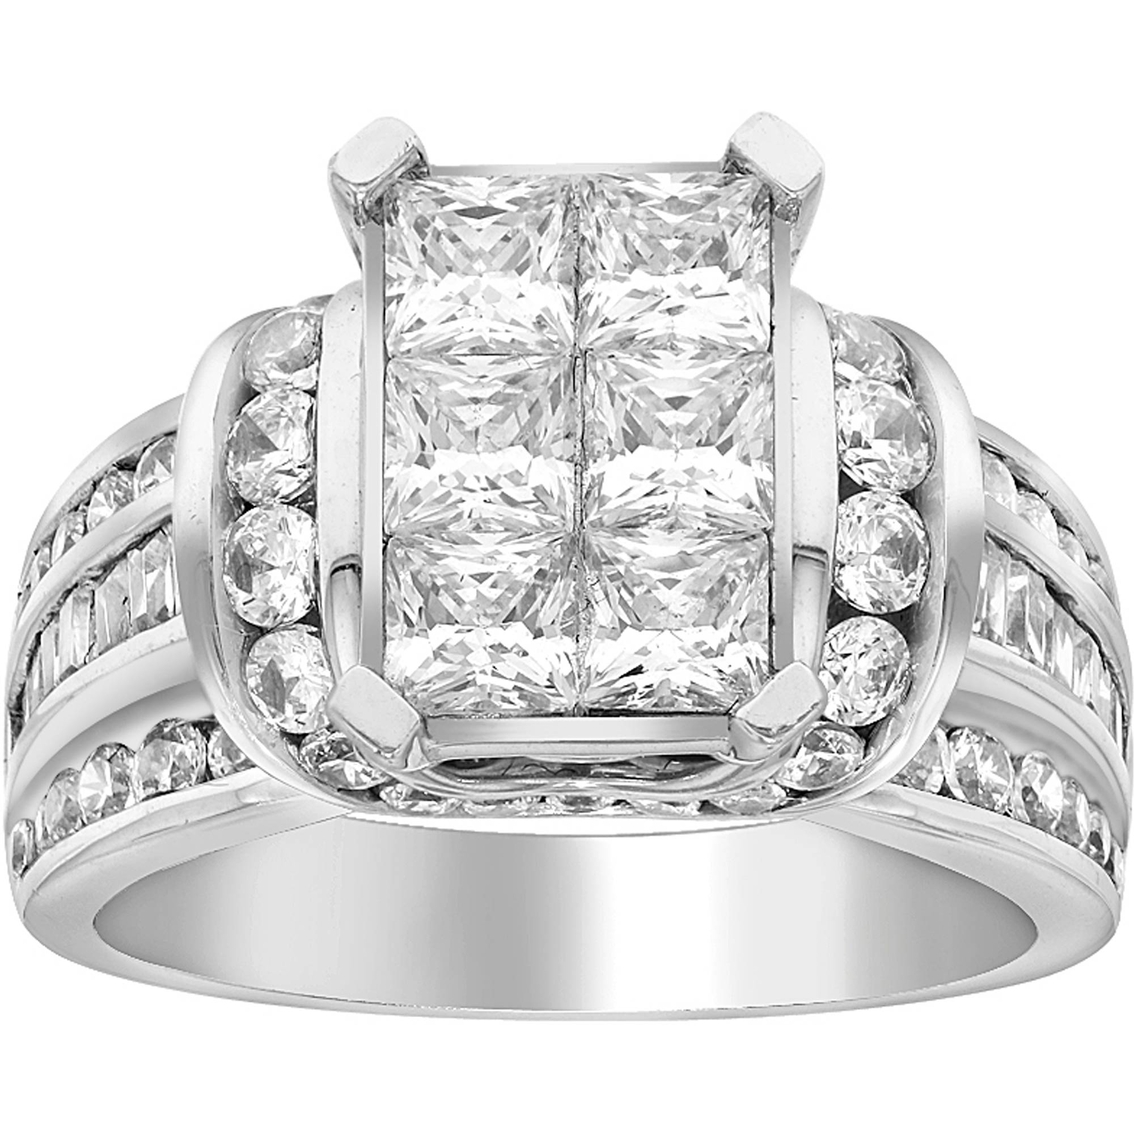 14K White Gold 3 CTW Diamond Ring - Image 1 of 3